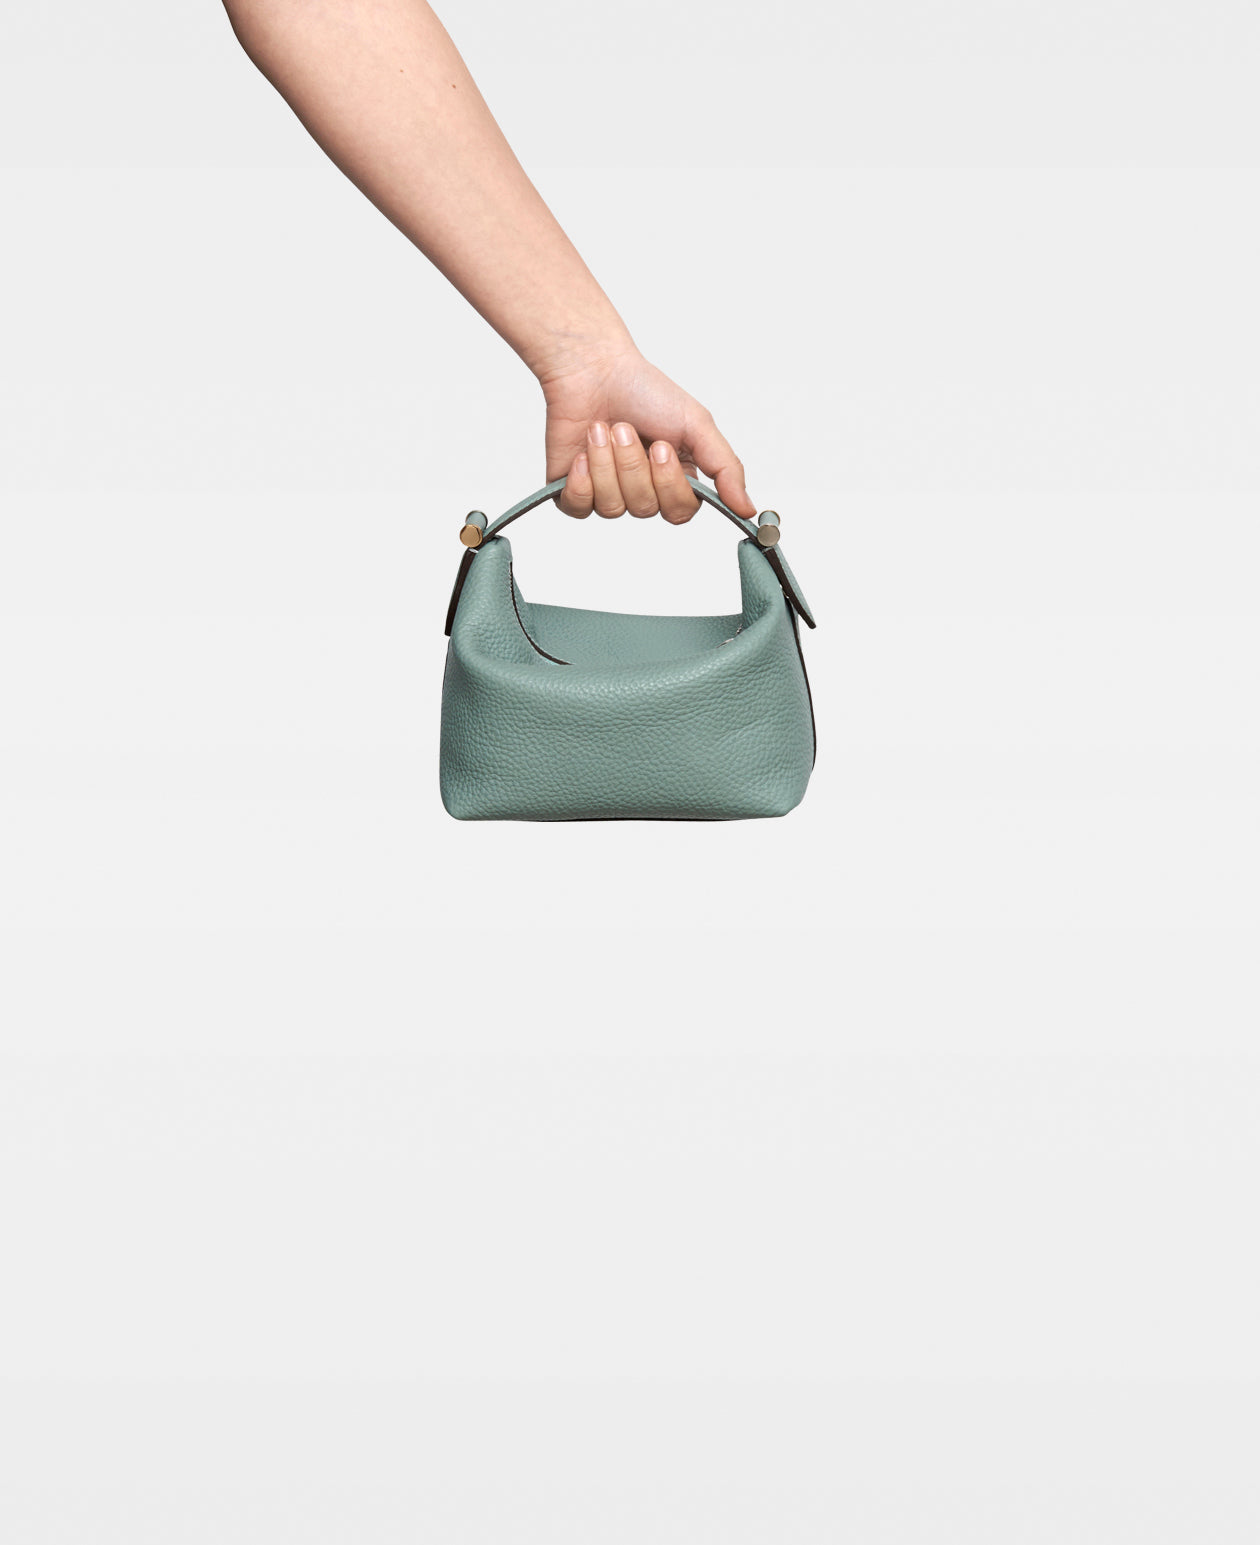 Fashion Women Handbag Tote Shoulder Bag Purse Top Handle with Removable  Strap | eBay